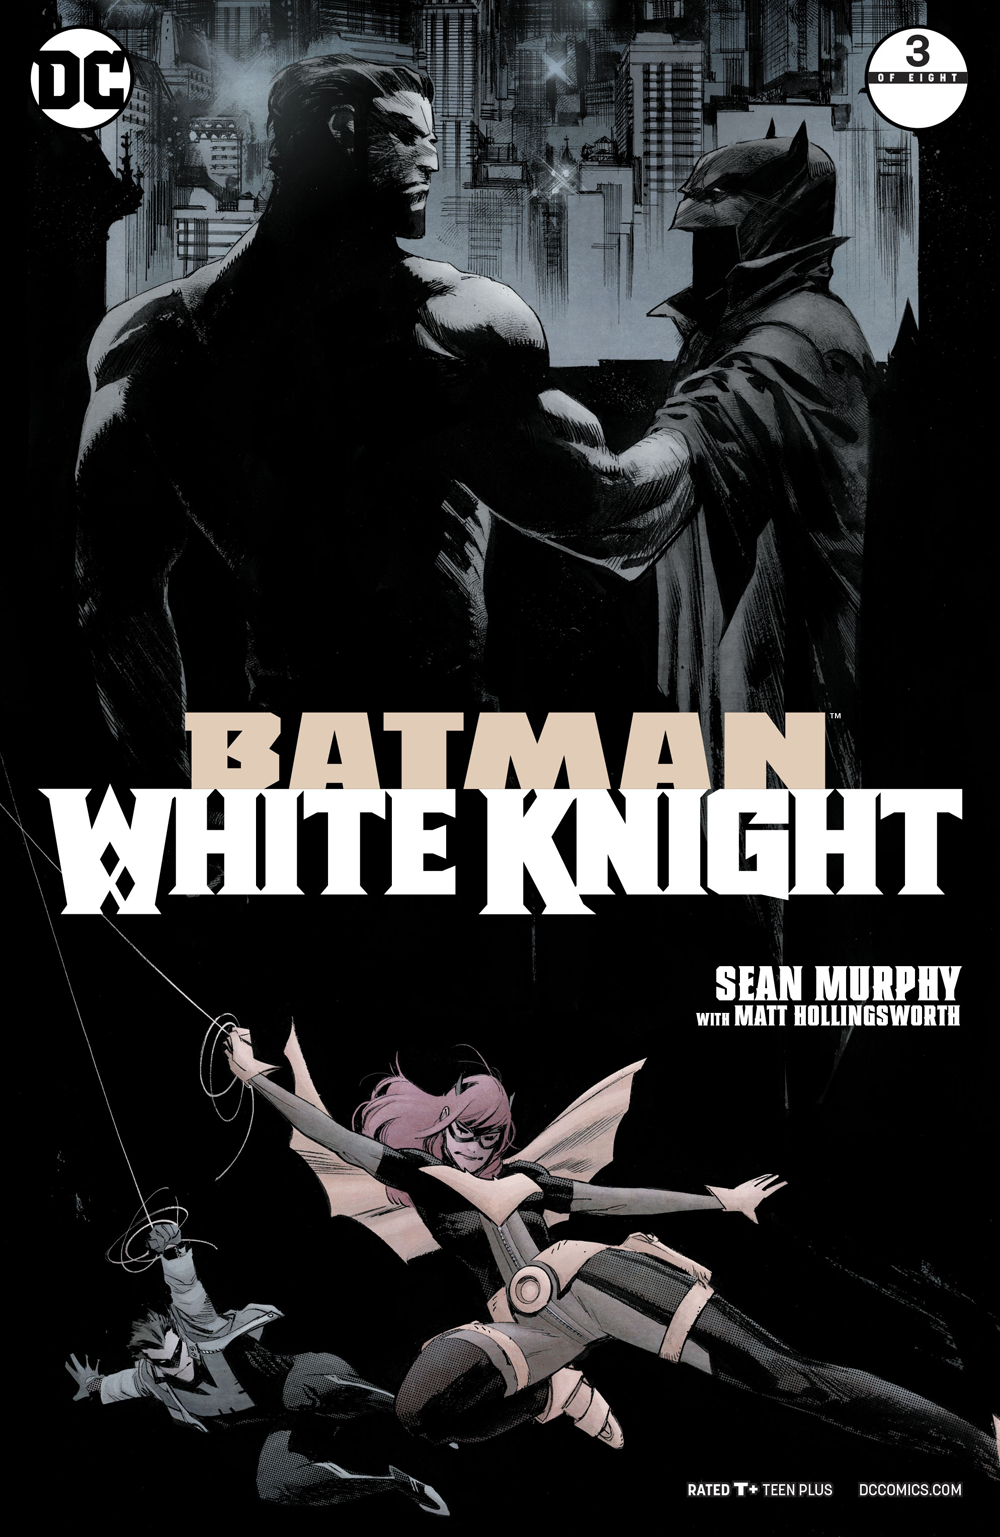 BATMAN WHITE KNIGHT #3 (OF 8)